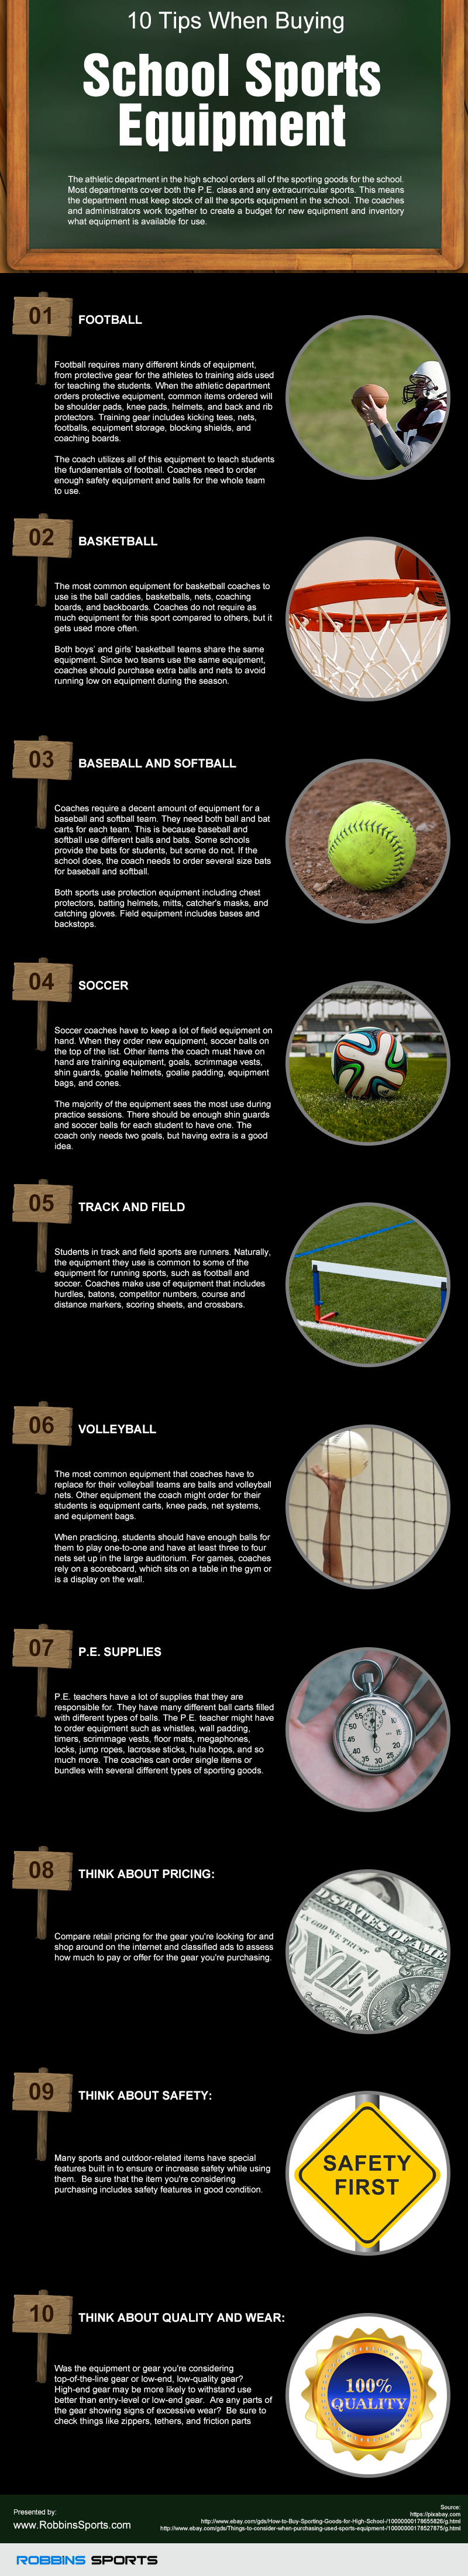 10 Tips When Buying School Sports Equipment